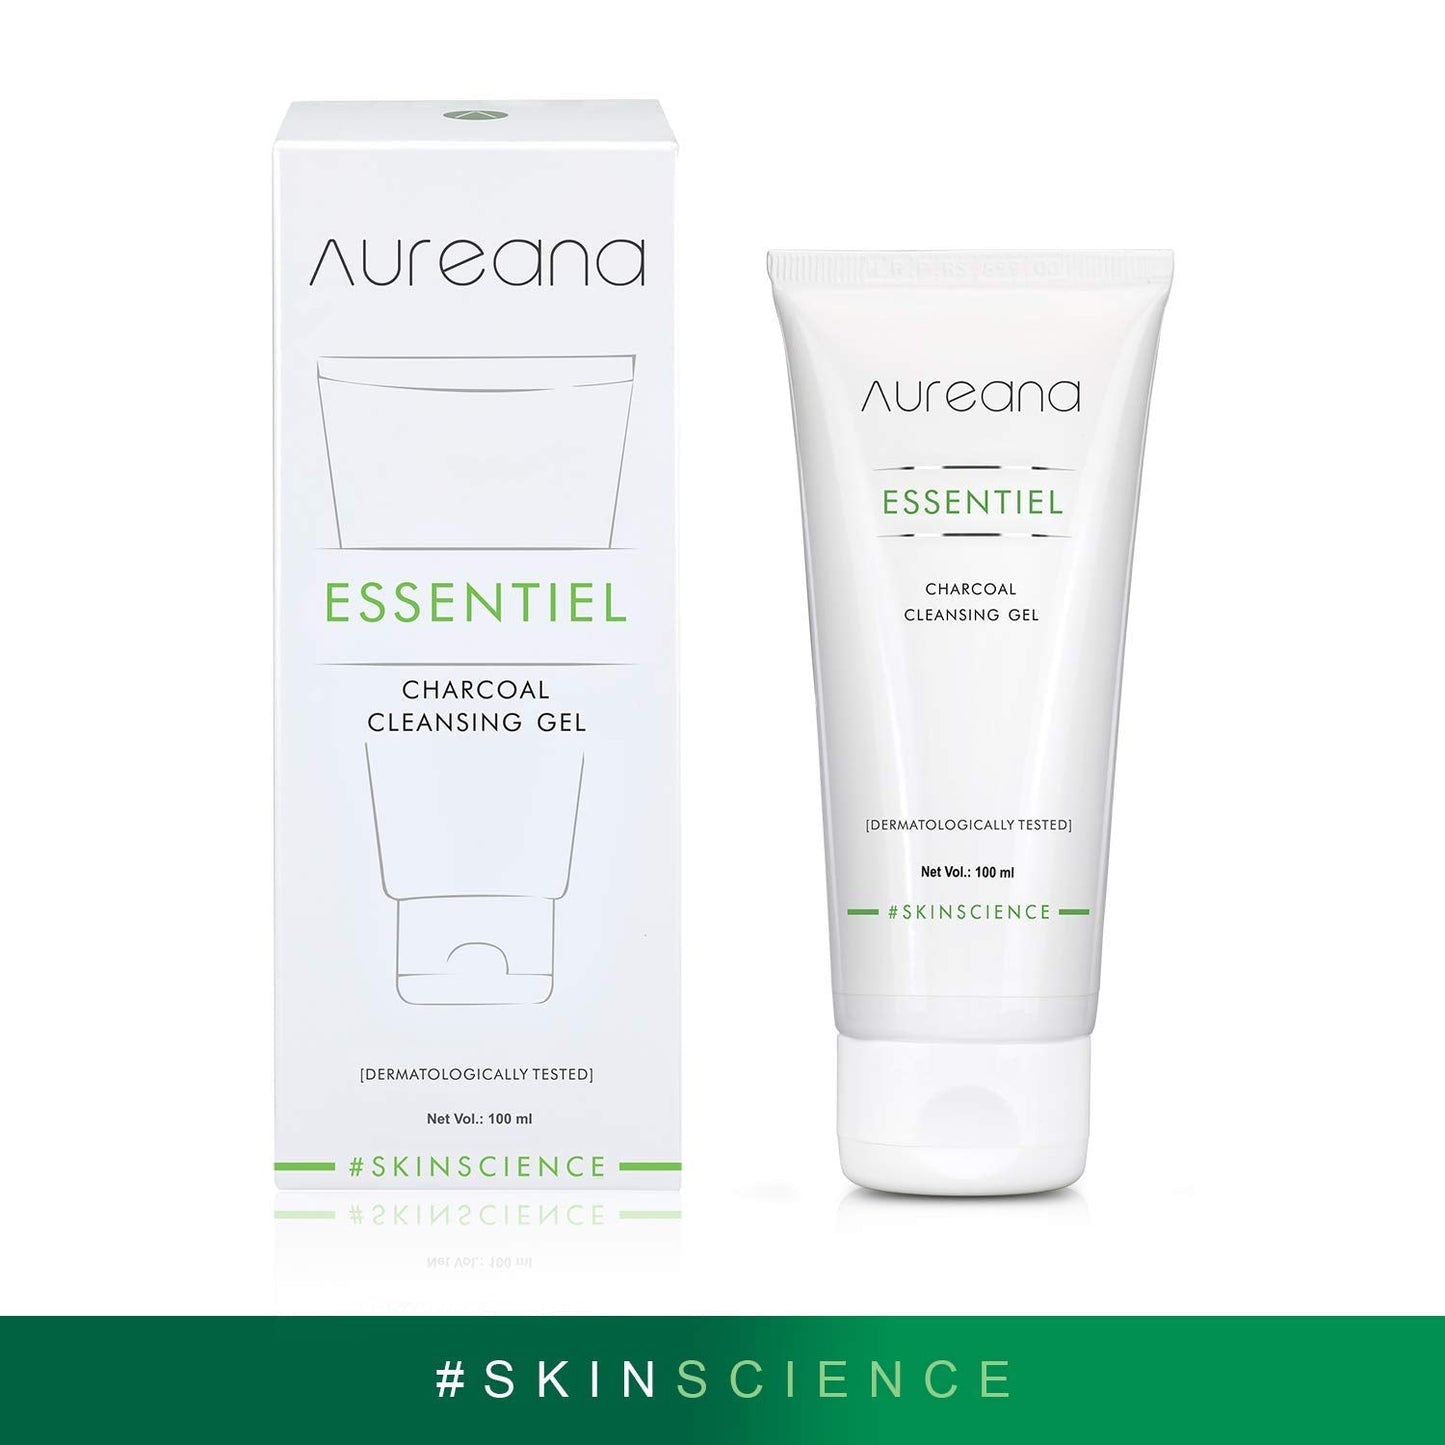 Aureana Essentiel Charcoal Cleansing Gel, 100ml,100% Veg, Sulphate Free, Paraben Free, Hypoallergenic, Dermatologically Tested, Efficacious Formula and Skin-friendly